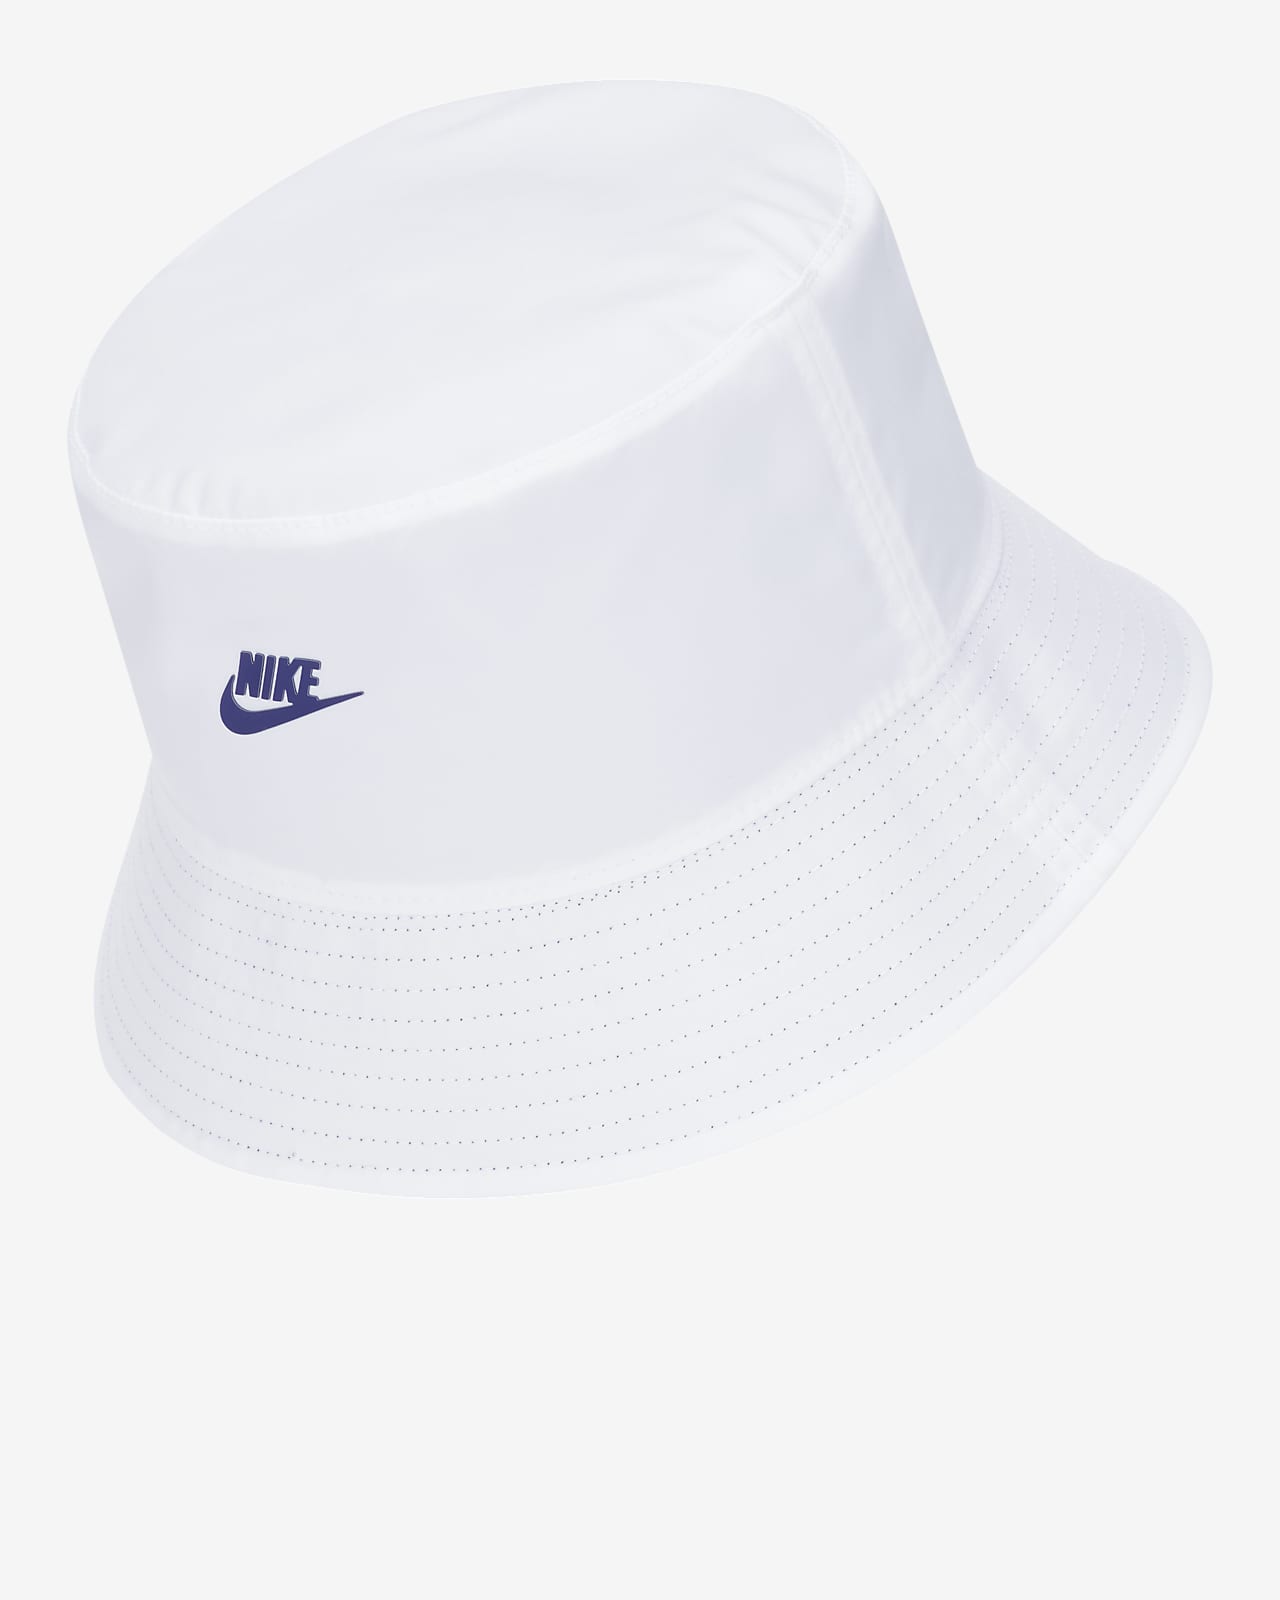 nike white bucket hat